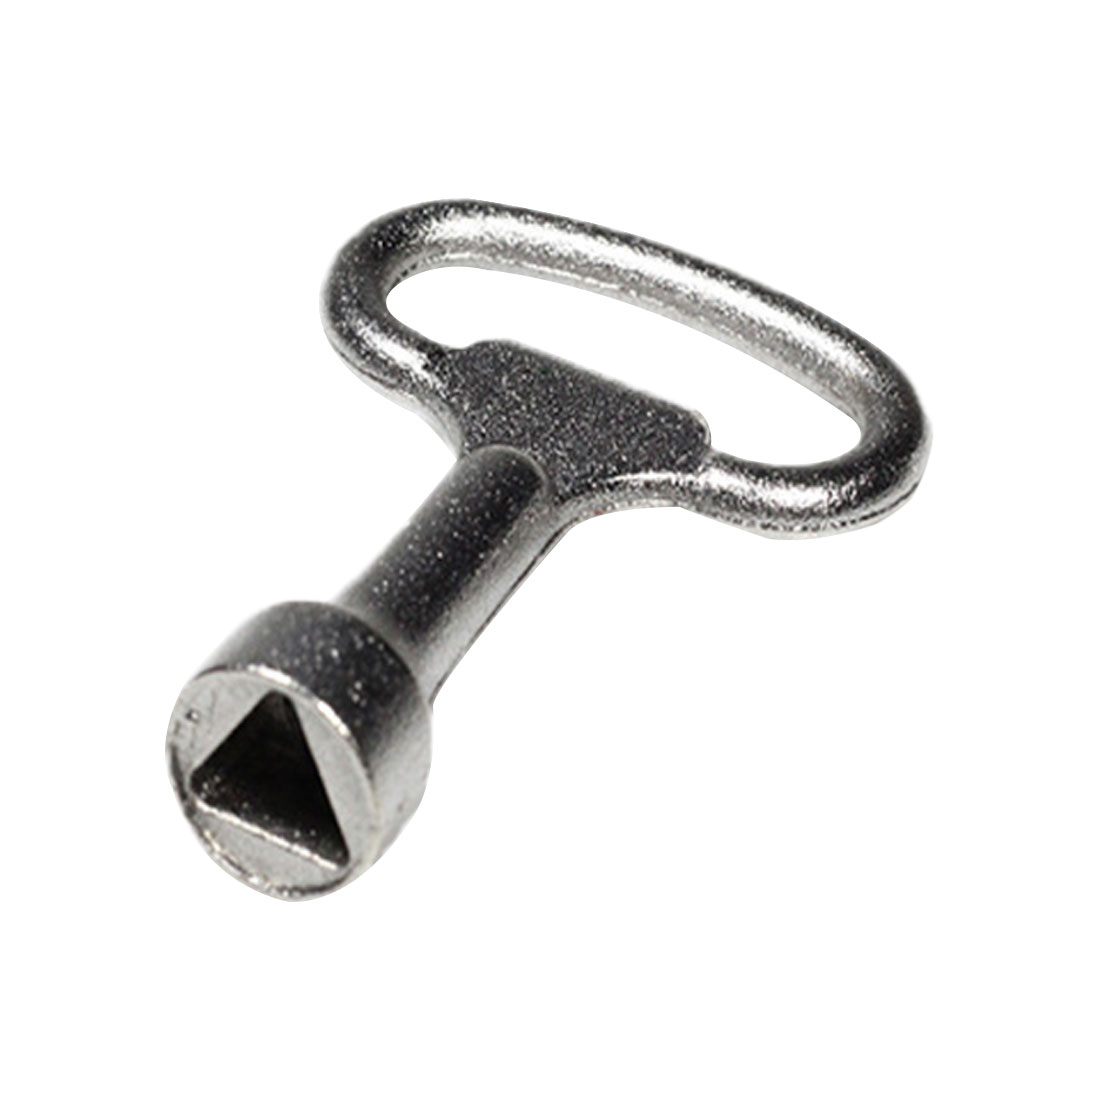 LOT OF 8 Steel Triangle Socket Spanner Key for 8 mm Panel Lock Mesan # 267.38 